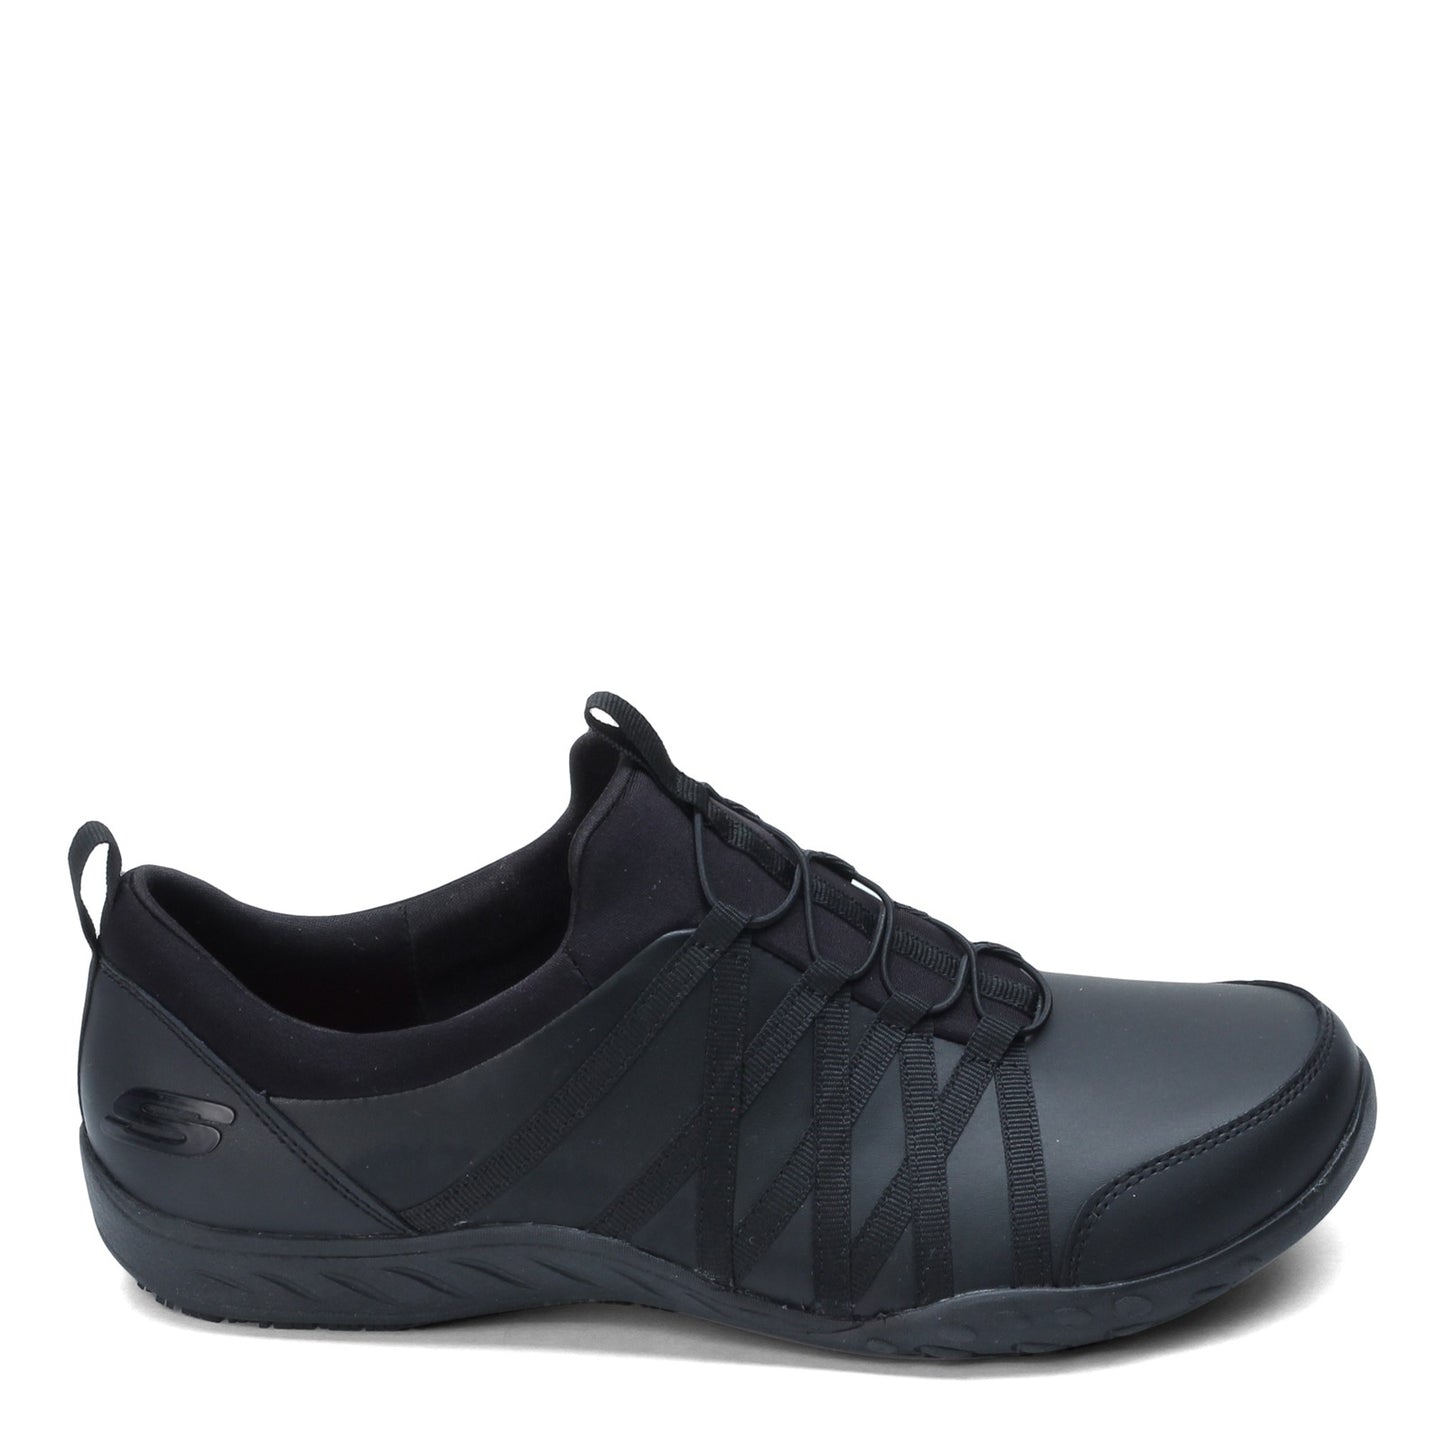 Peltz Shoes  Women's Skechers Rodessa - Dowding SR Work Shoe Black 108014-BLK